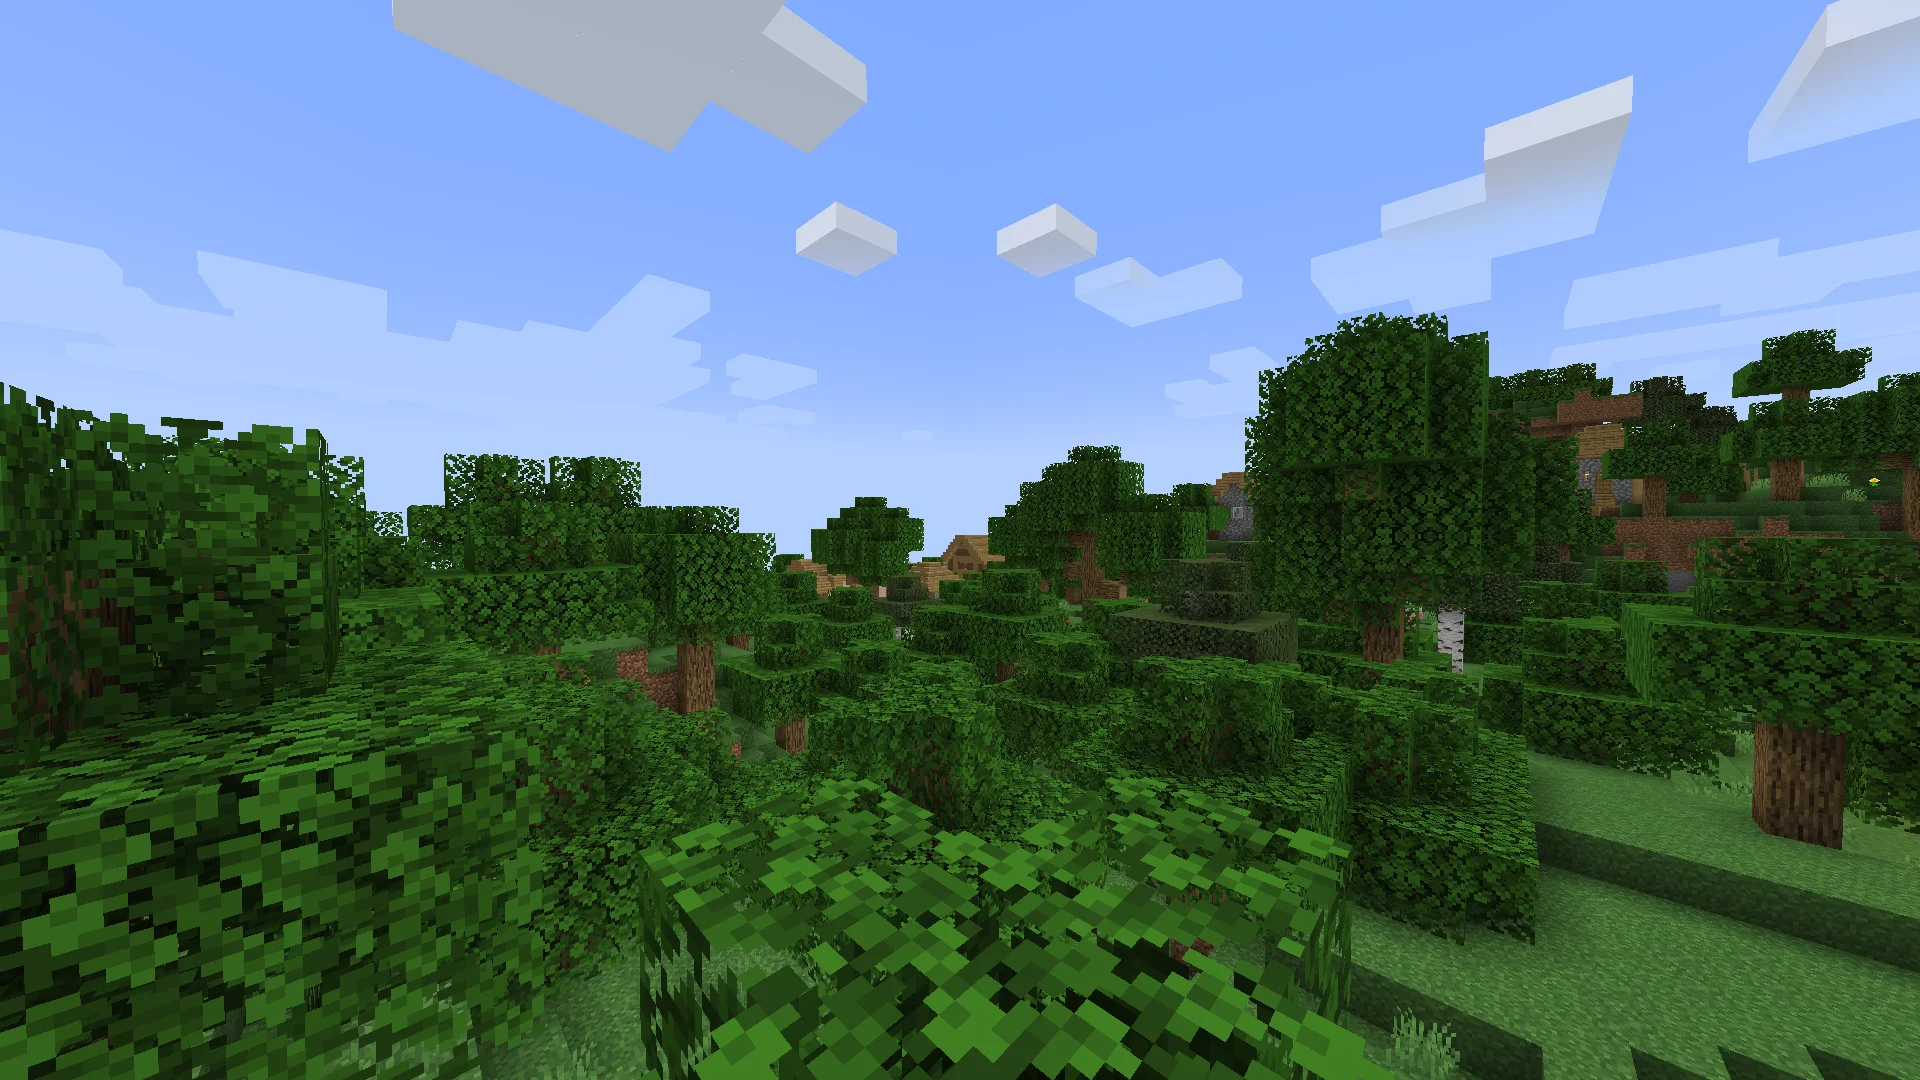 Vanilla Minecraft Oak Forest with a Village in the background